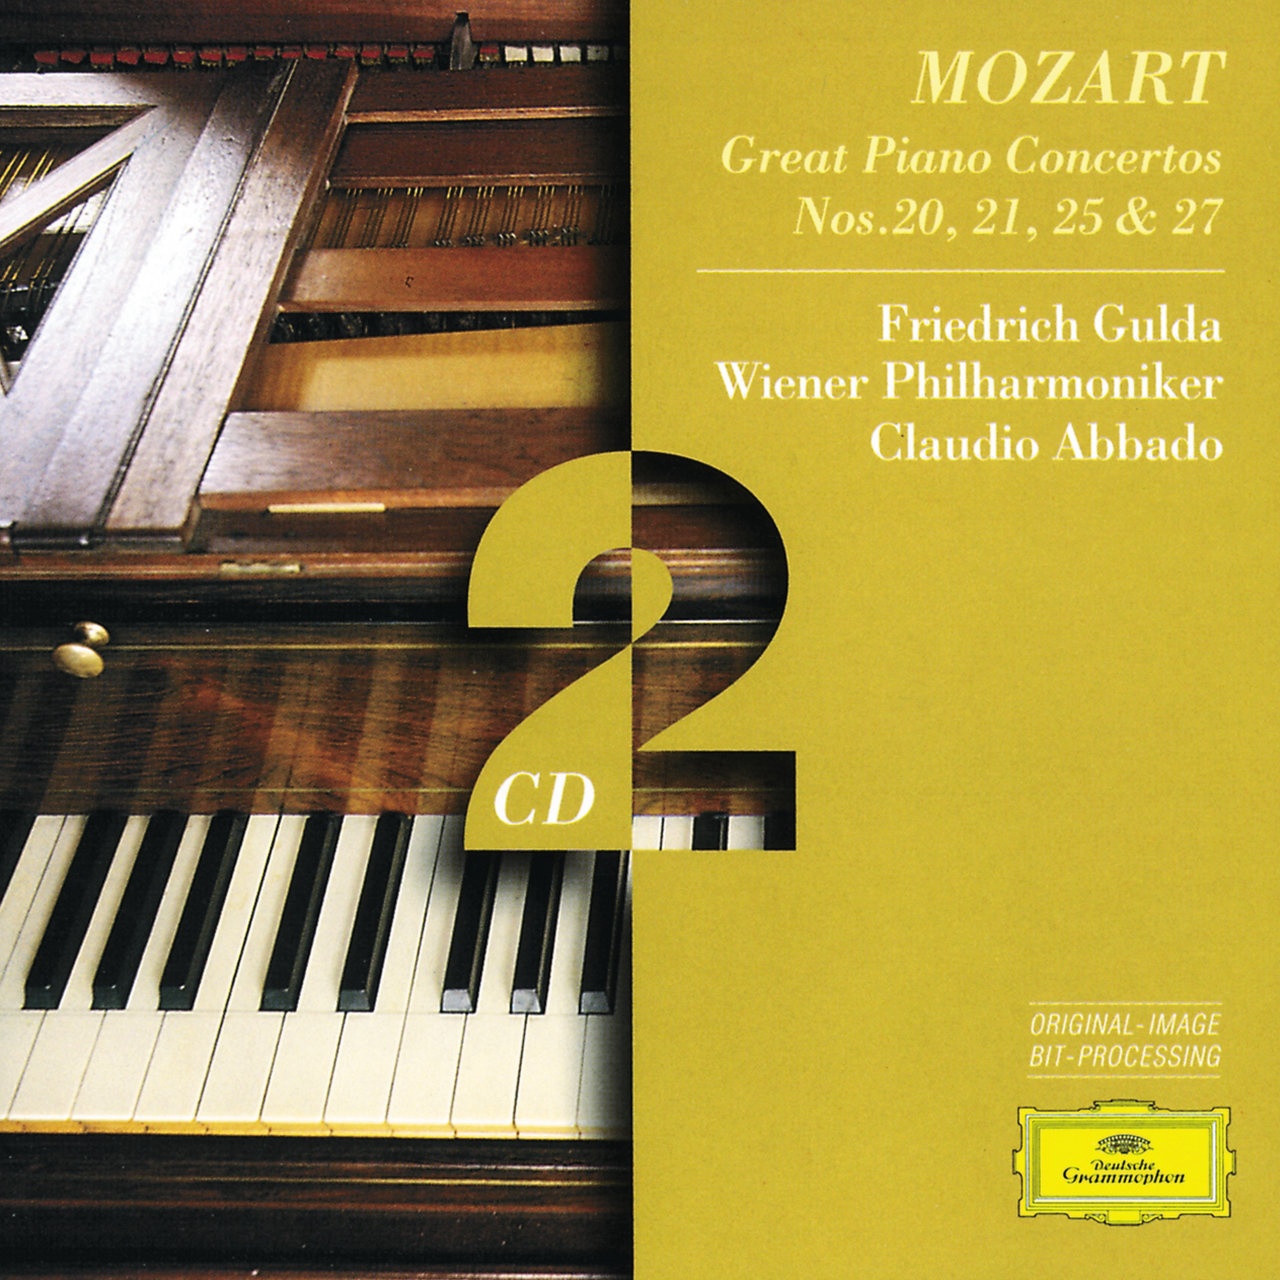 Mozart: Piano Concerto No.25 In C, K.503 - 1. Allegro maestoso - Cadenza: Friedrich Gulda